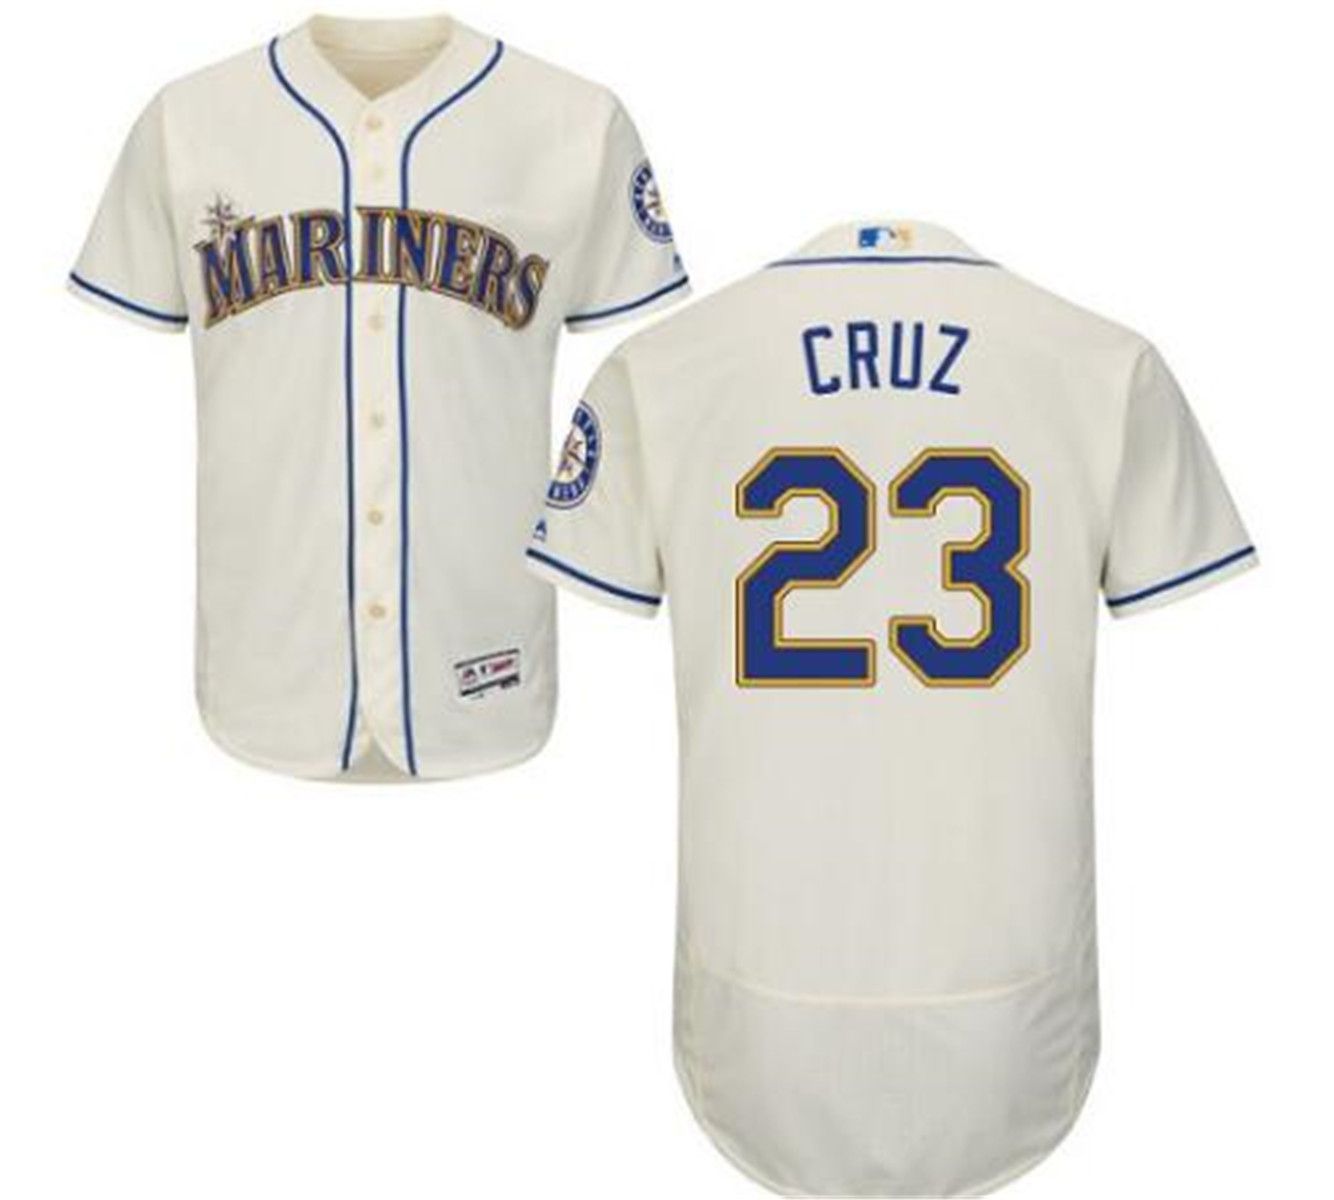 Nelson Cruz #23 Seattle Mariners Navy Blue Cool Base Stitched MLB Jers